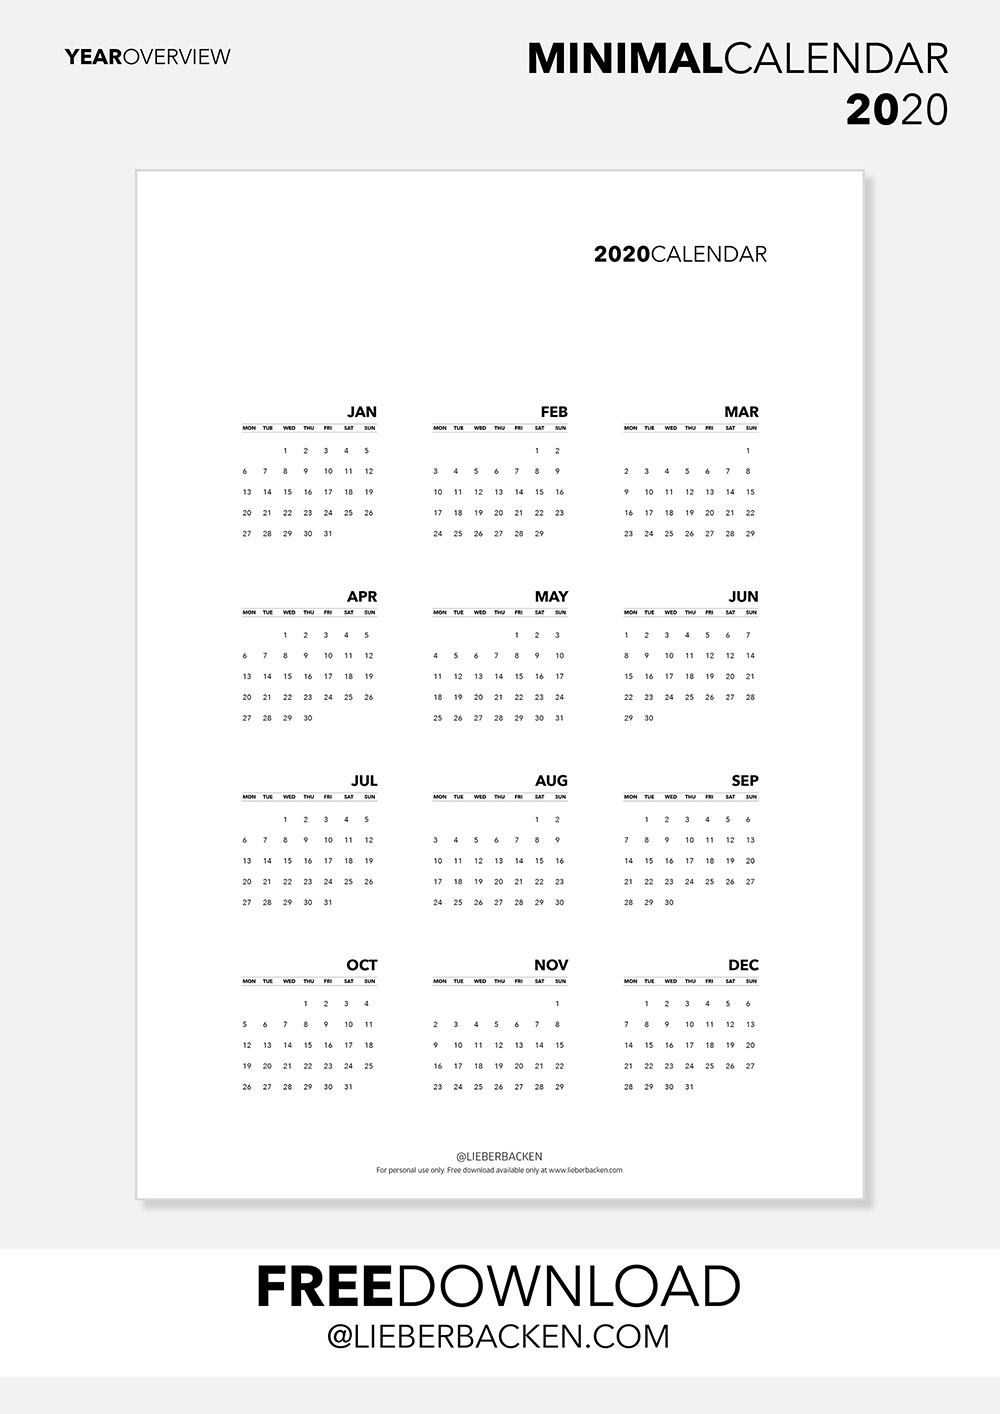 Year Overview - Free Printable Calender 2020 | Gratis Download Kalender 2020